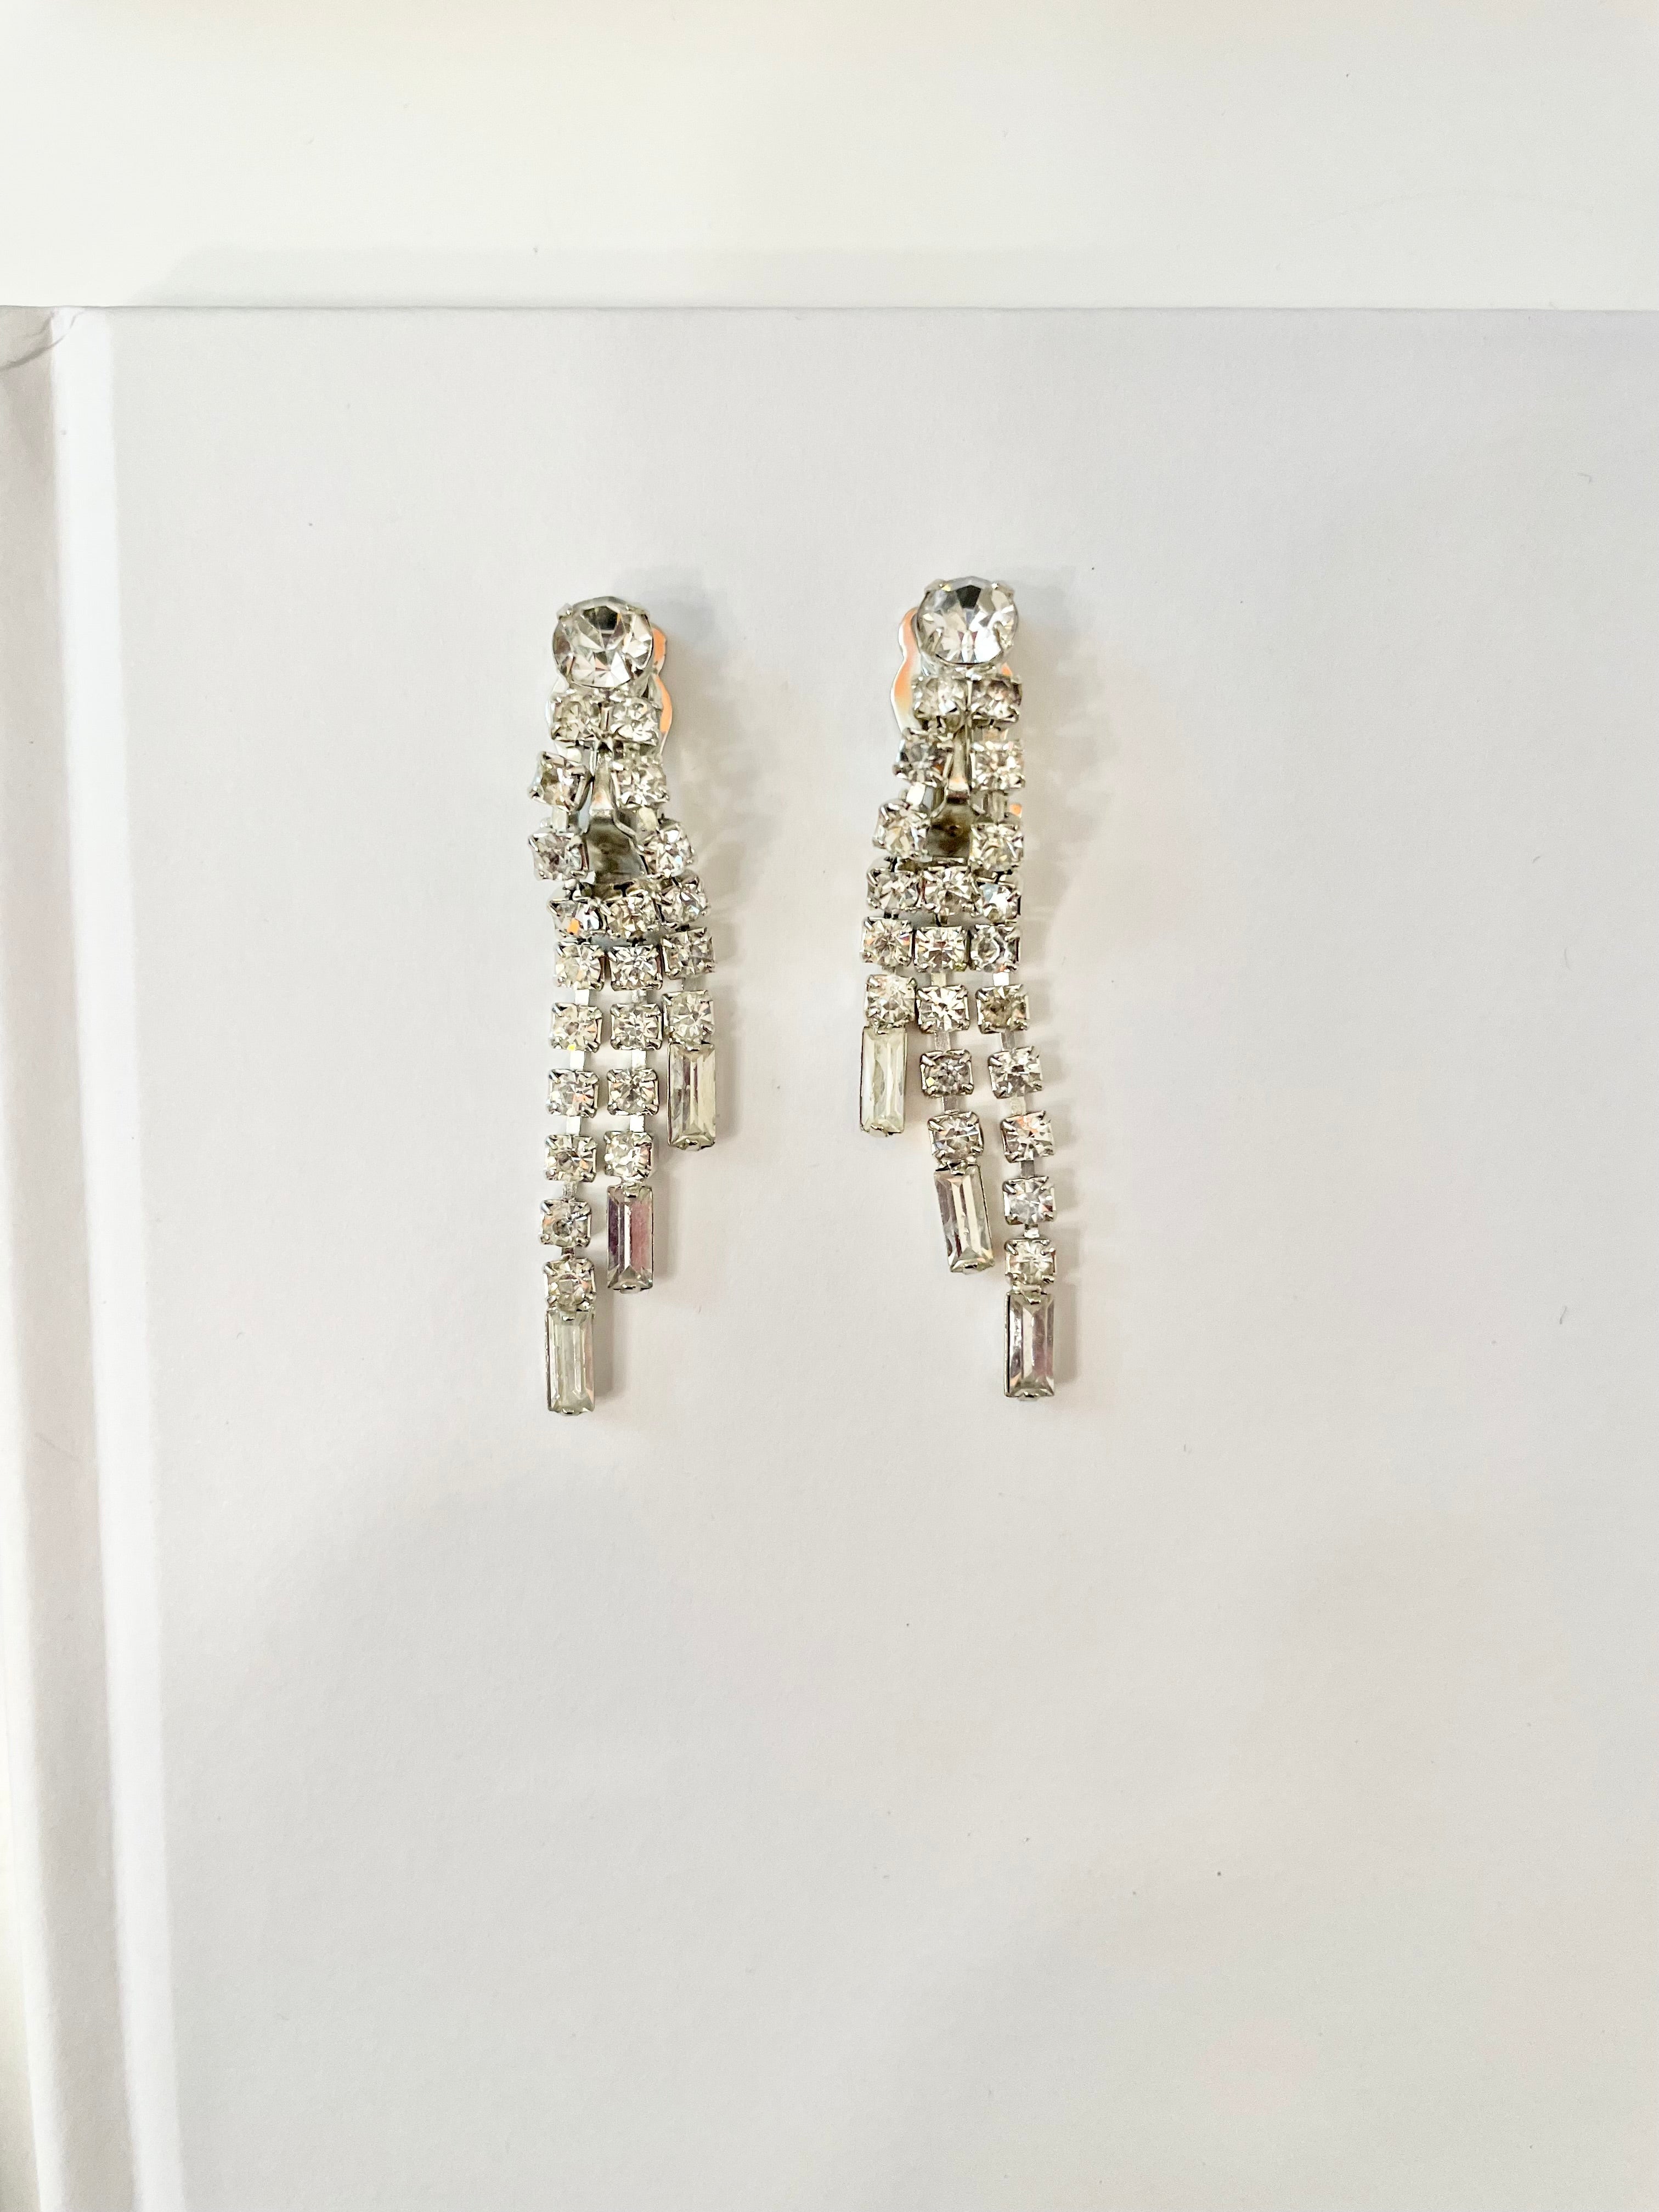 Truly elegant 1960's drop earrings... so glamorous!